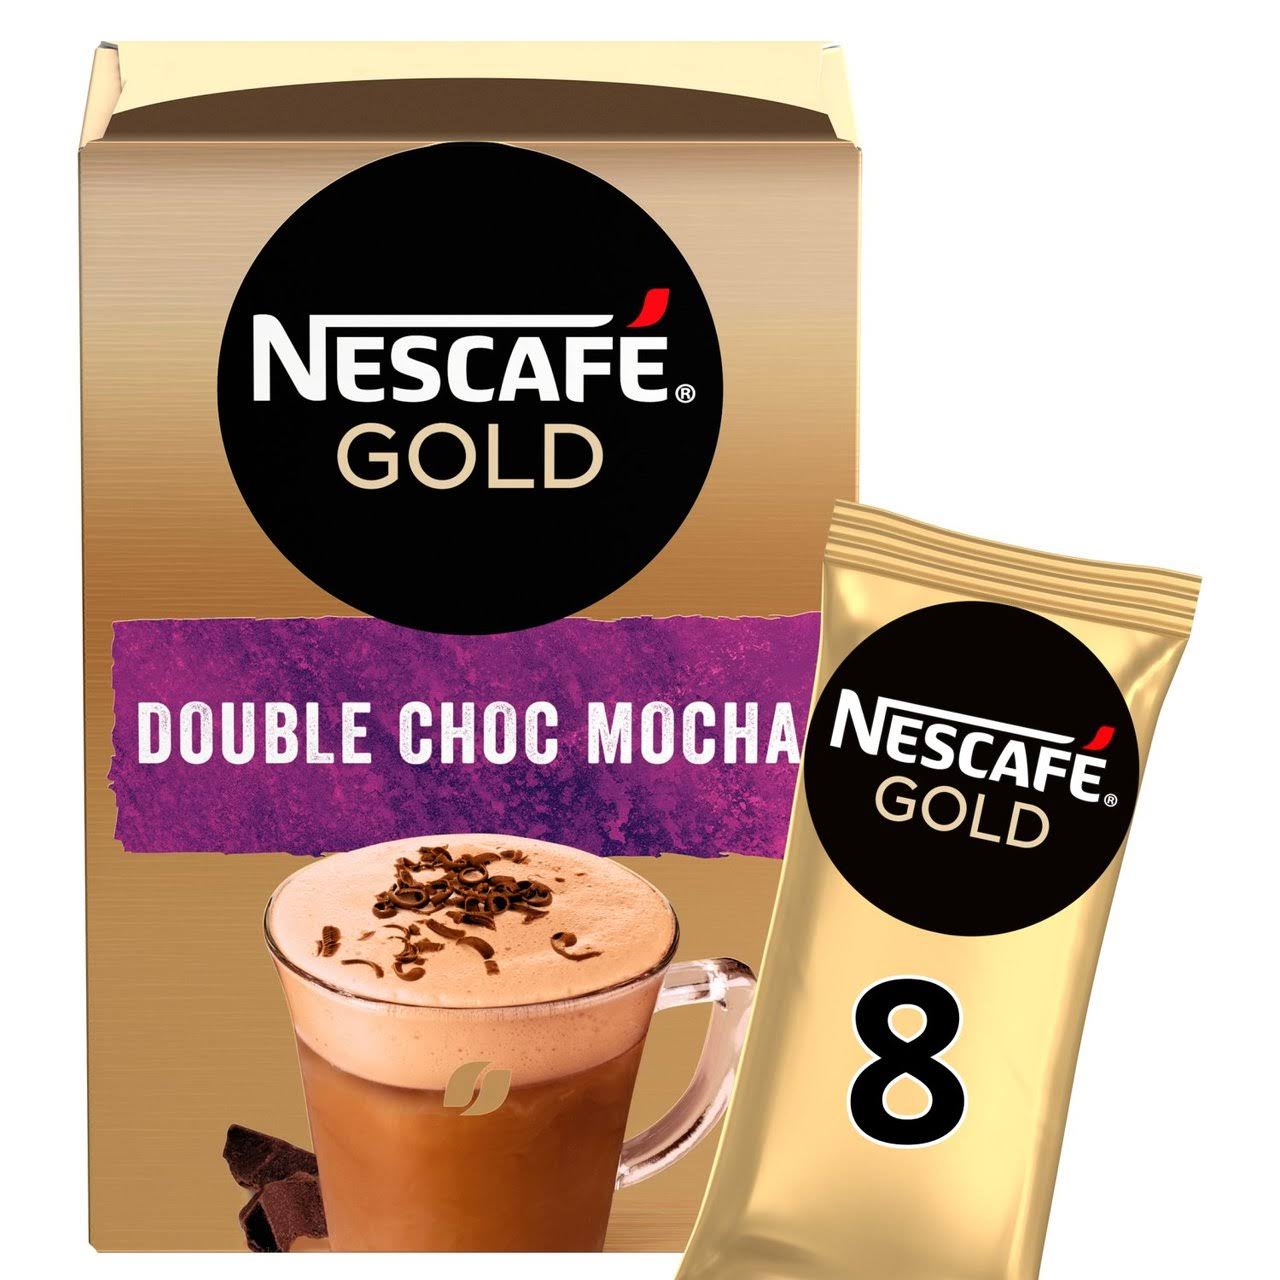 Nescafe Gold Double Choca Mocha 8 Sachets Delivered to Ireland